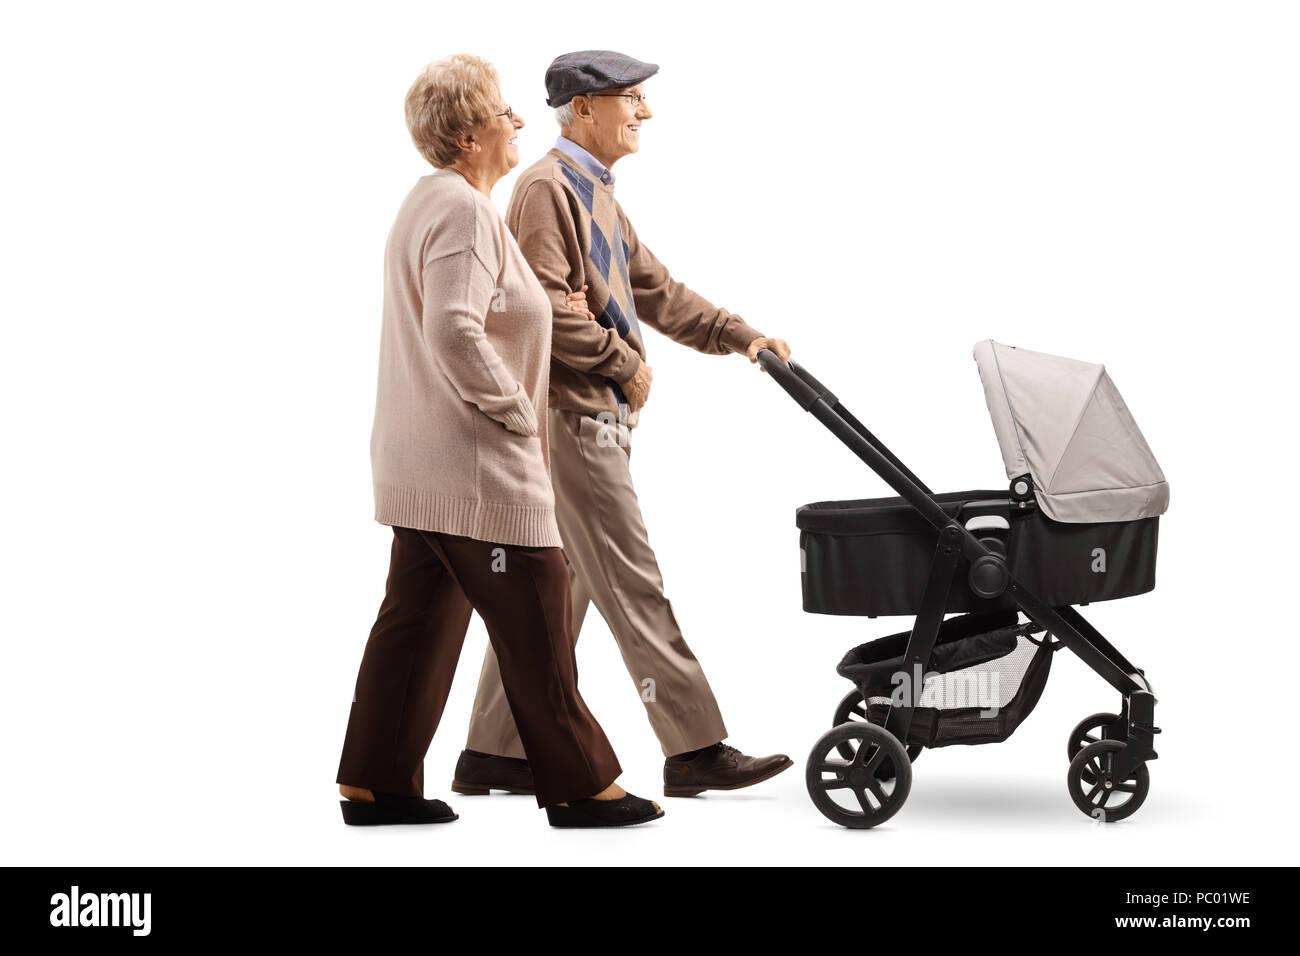 Full length profile shot of a senior couple pushing a baby stroller isolated on white background Stock Photo